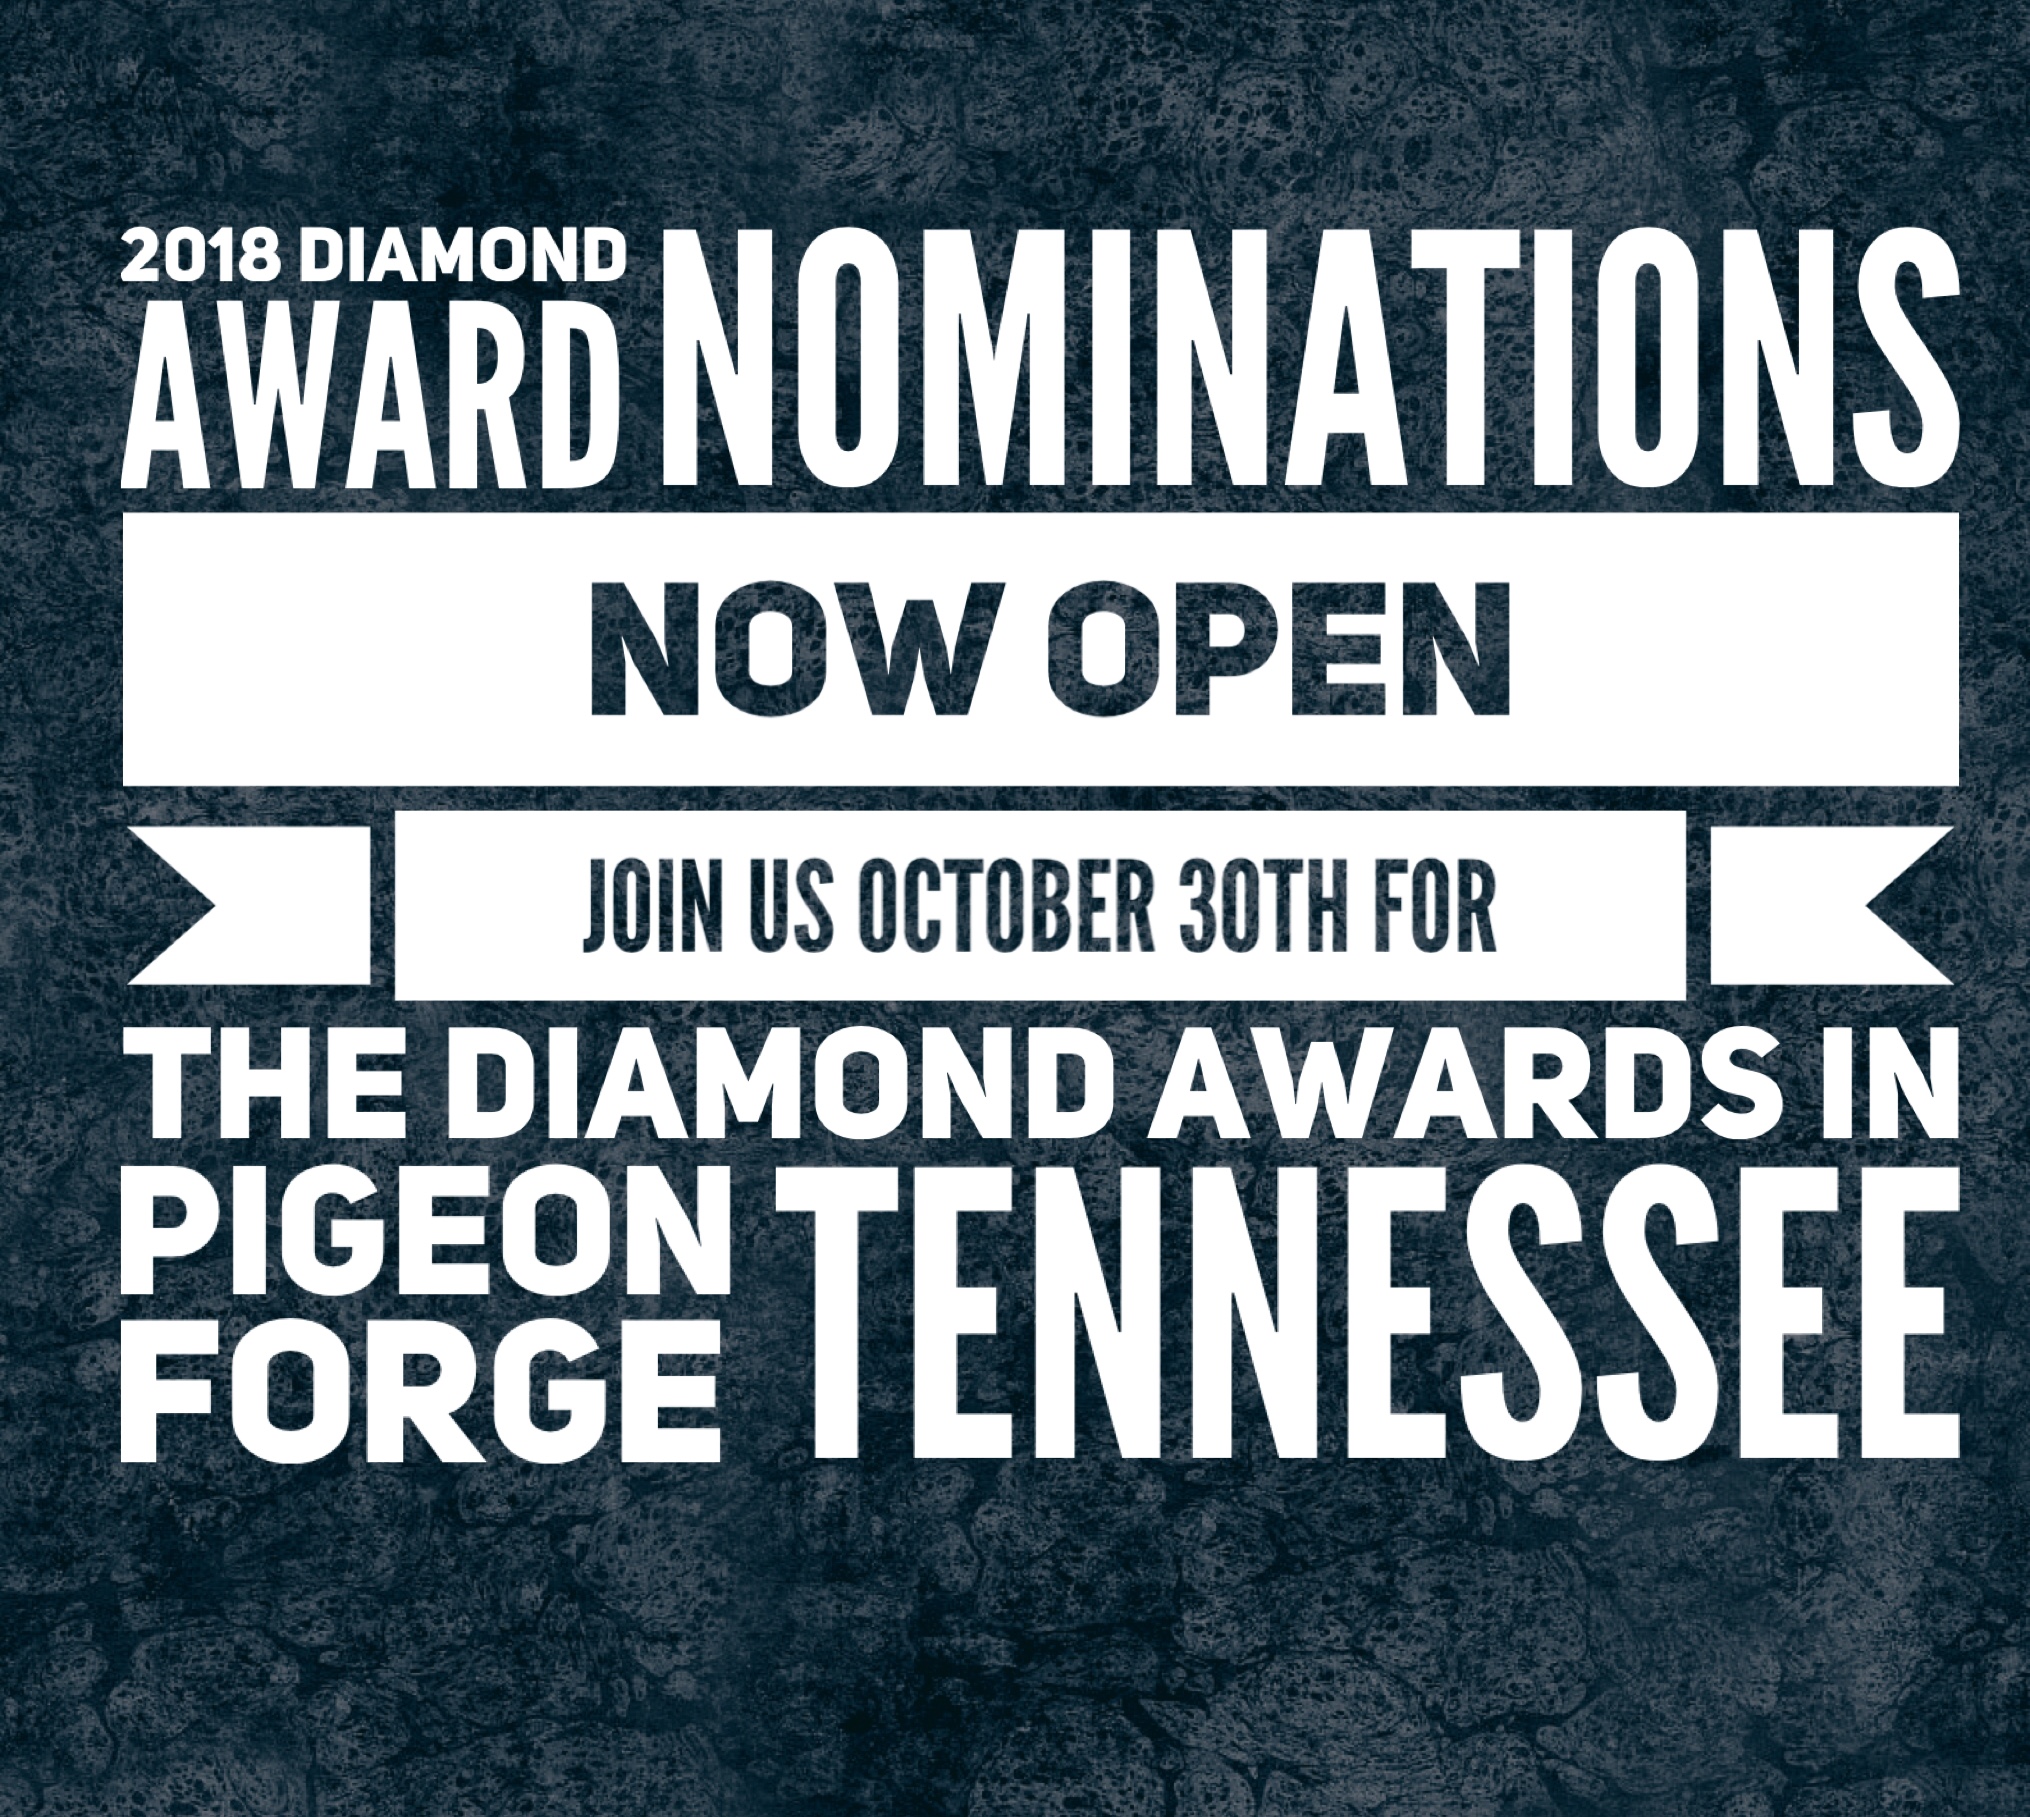 2018 Diamond Award Nominations Now Open